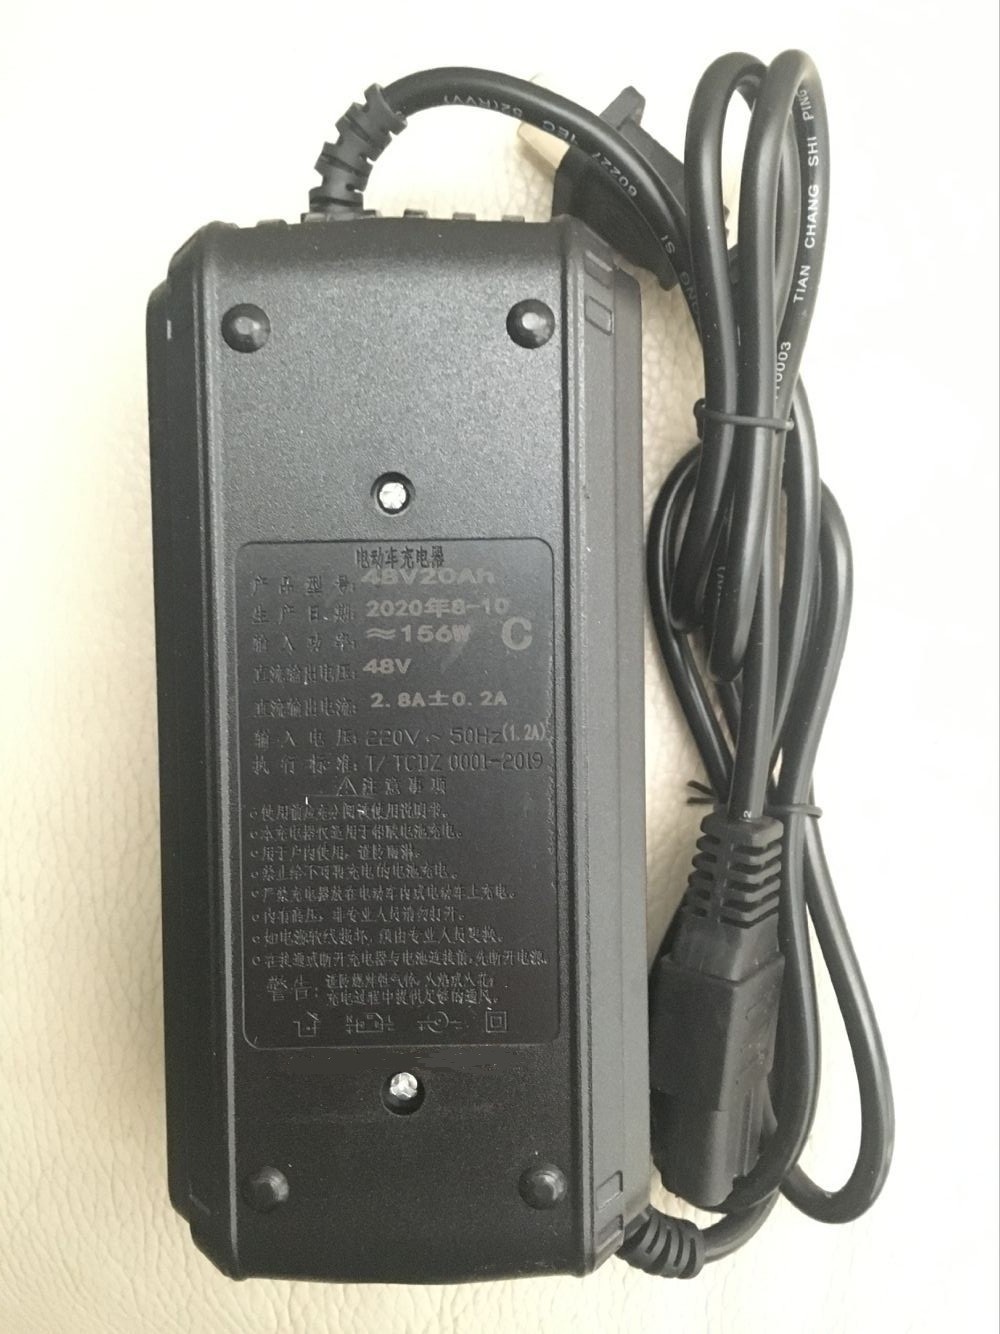 Quality lead acid battery smart charger with auto turn off function 48v 12ah 48v 20ah 48v 32ah 60v 20ah wholesale